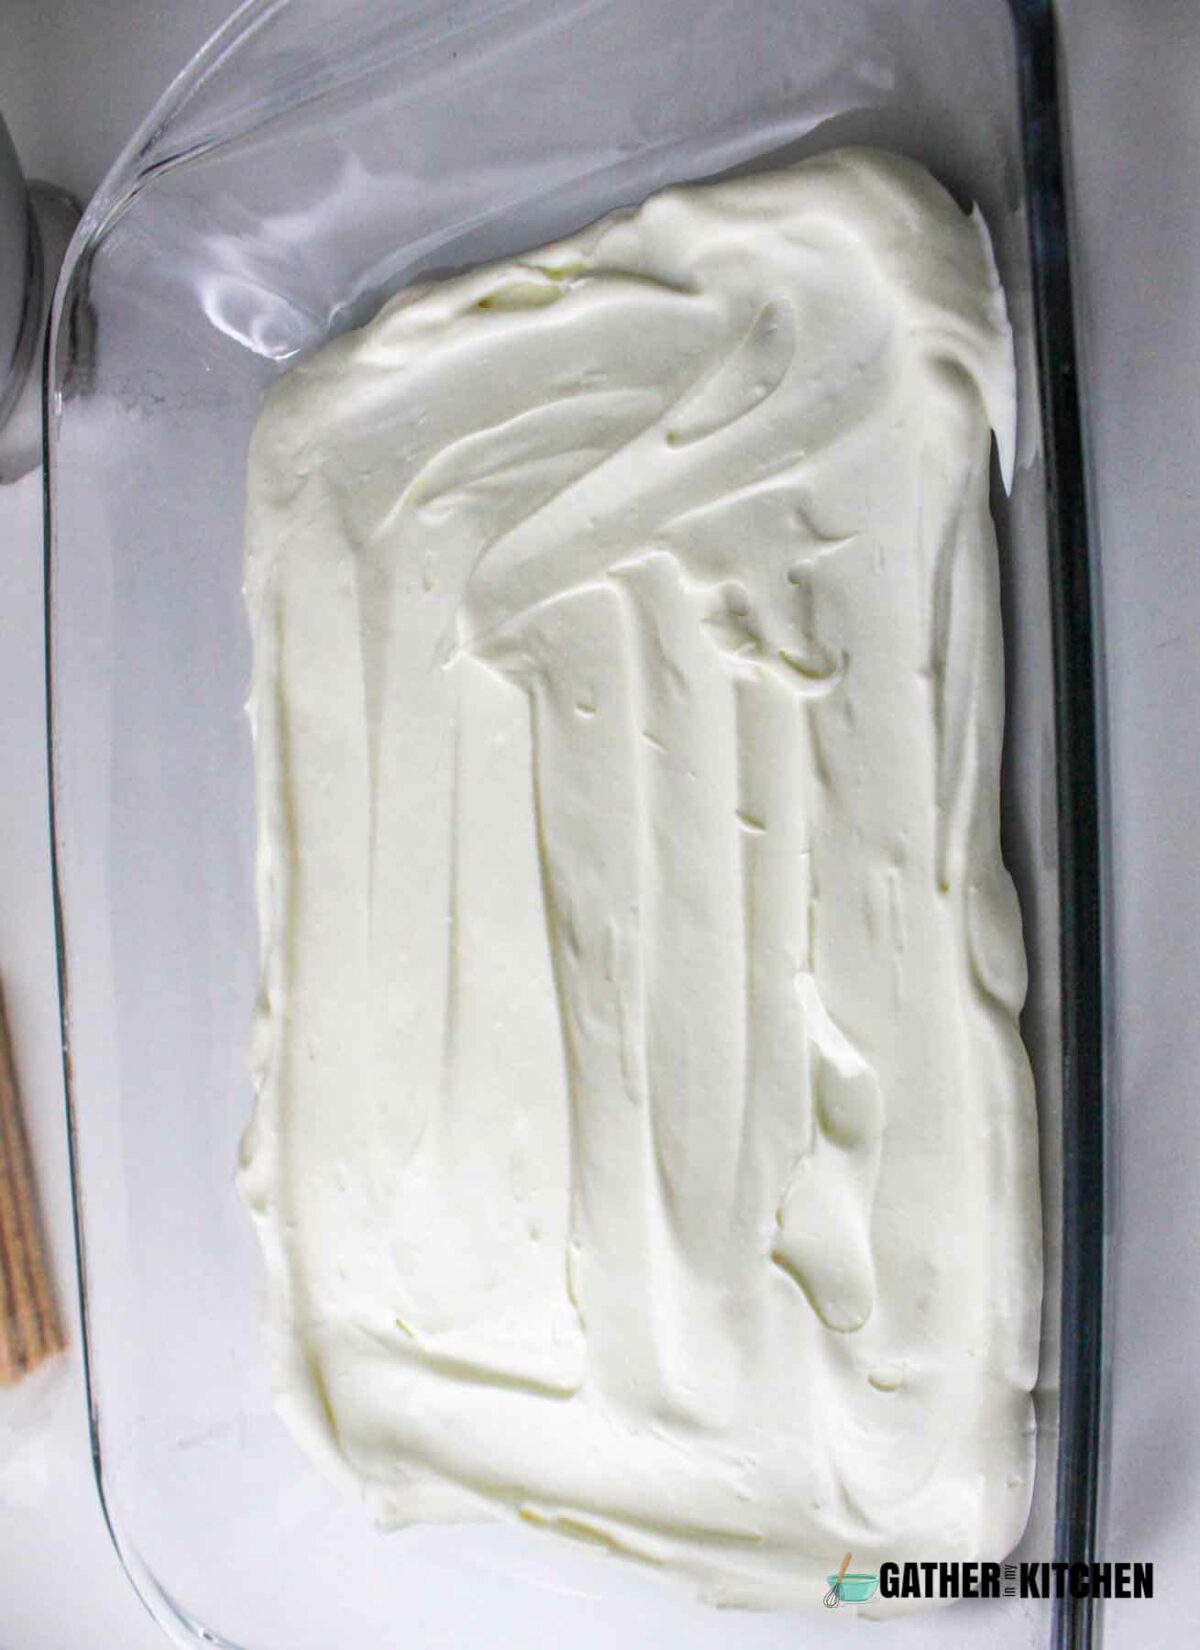 Marshmallow cream layer over graham crackers in dish.